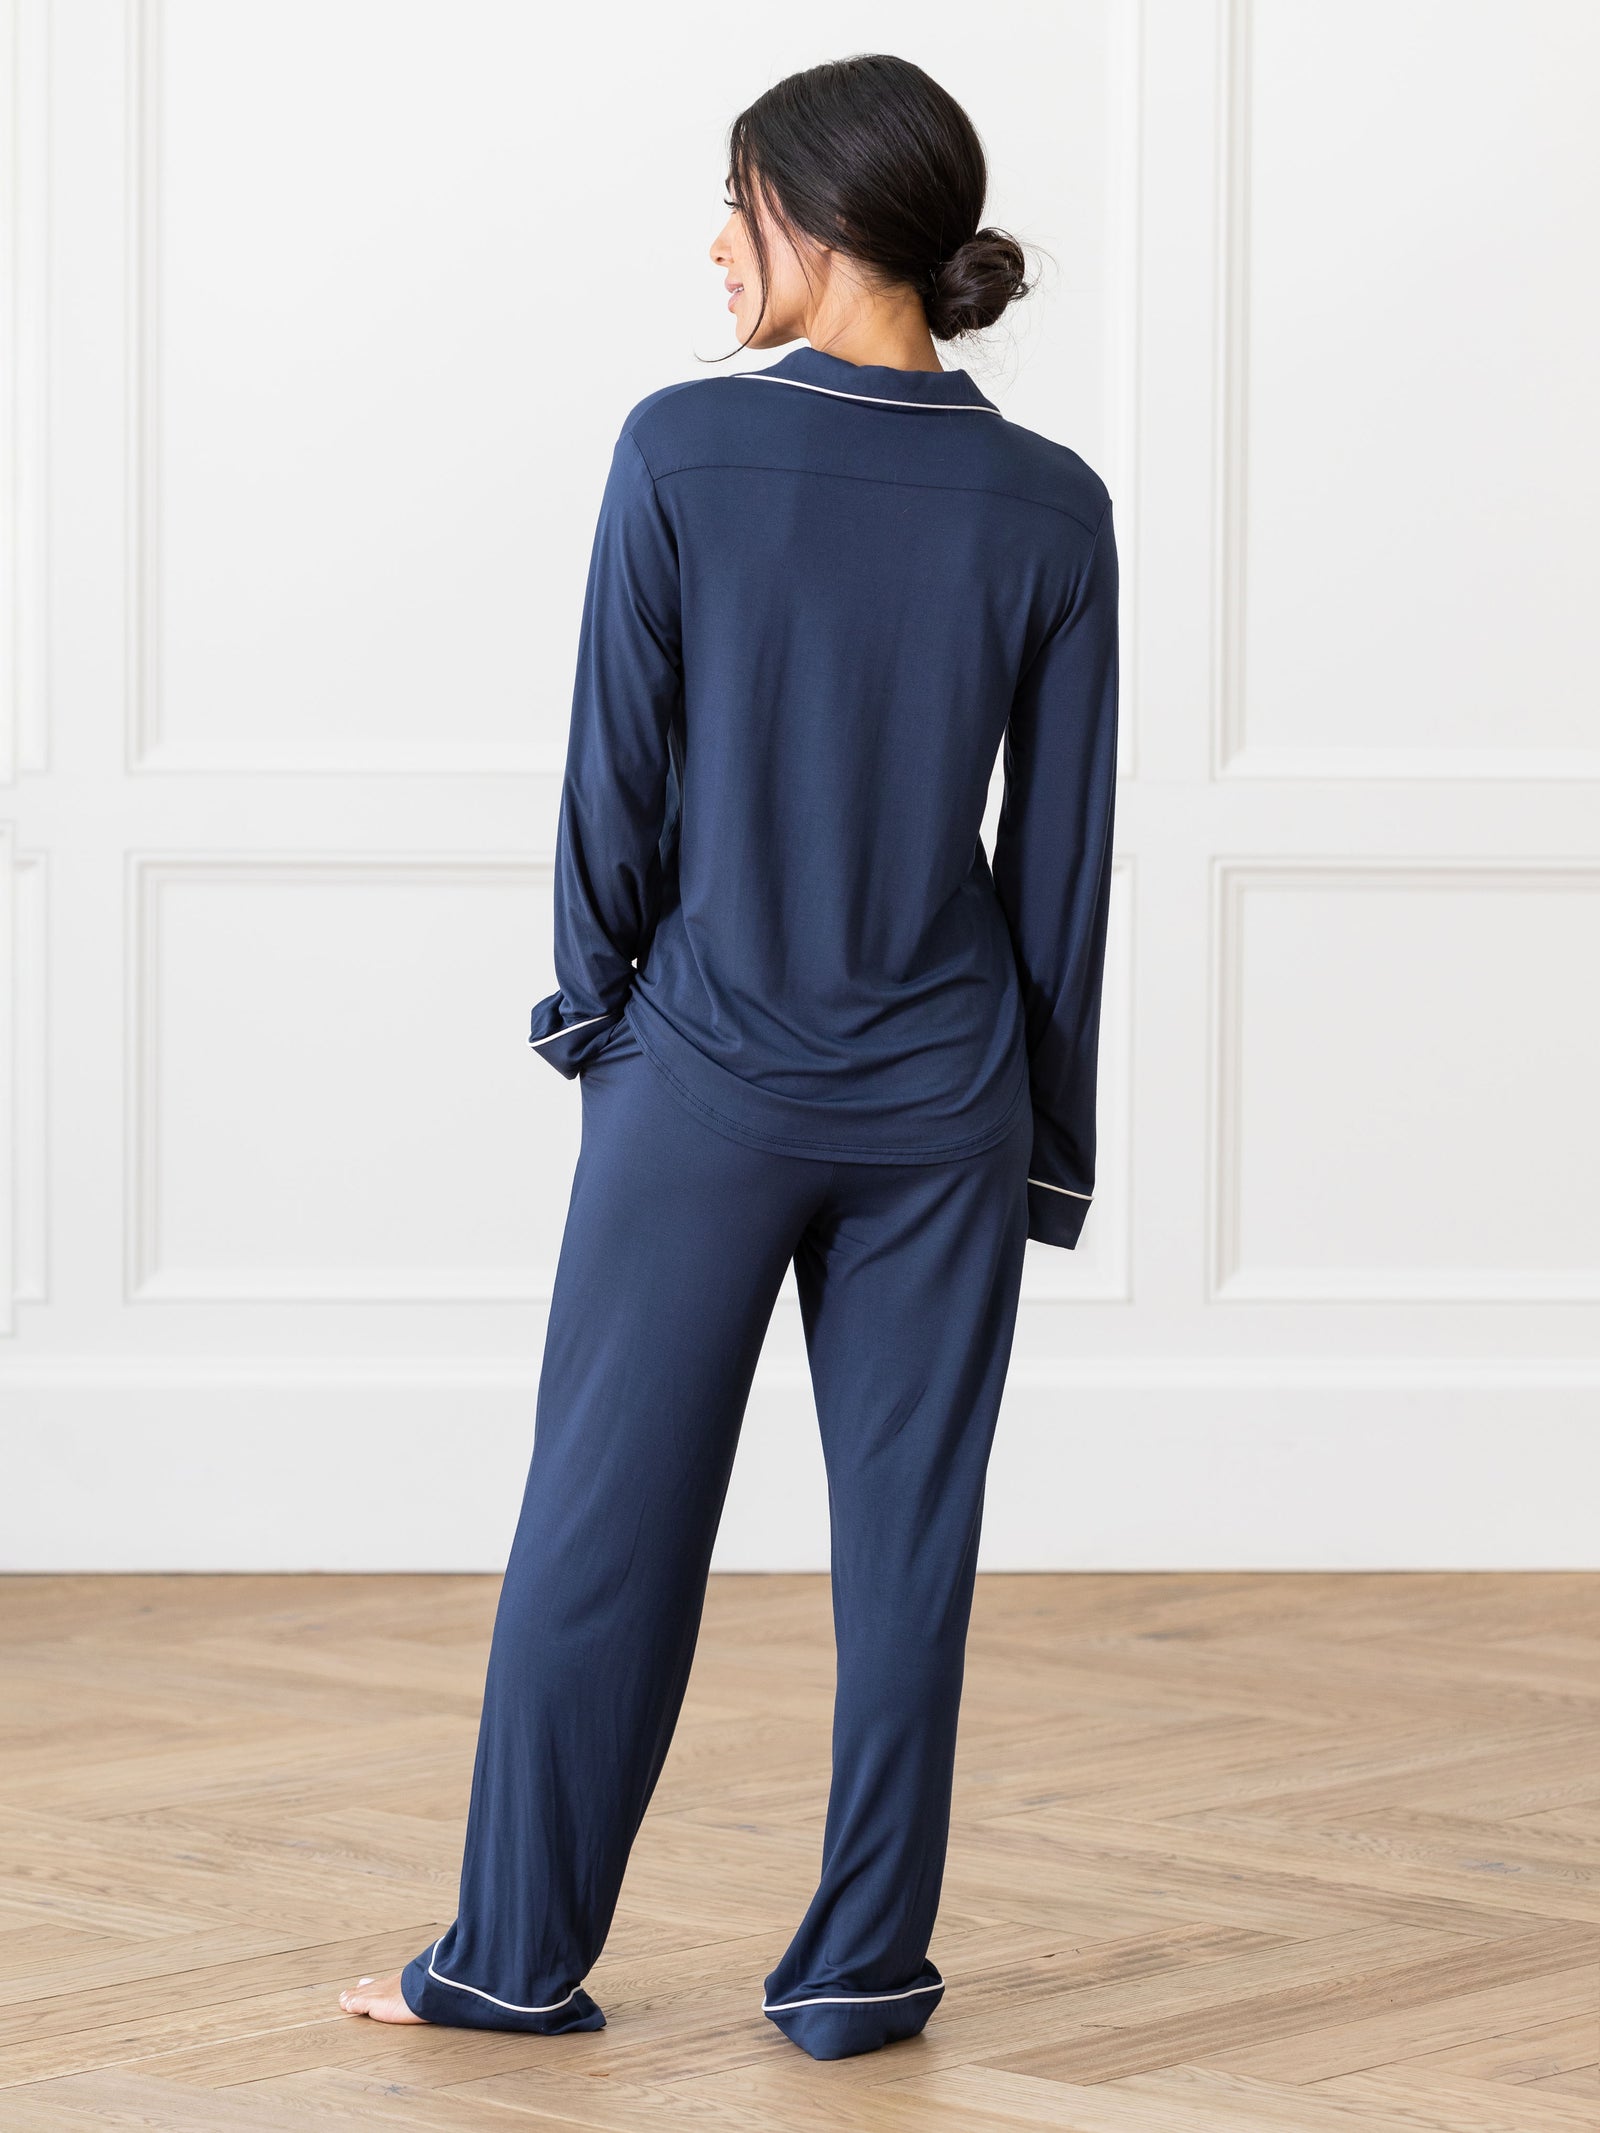 Norah Long Sleeve Bamboo Pajama Set